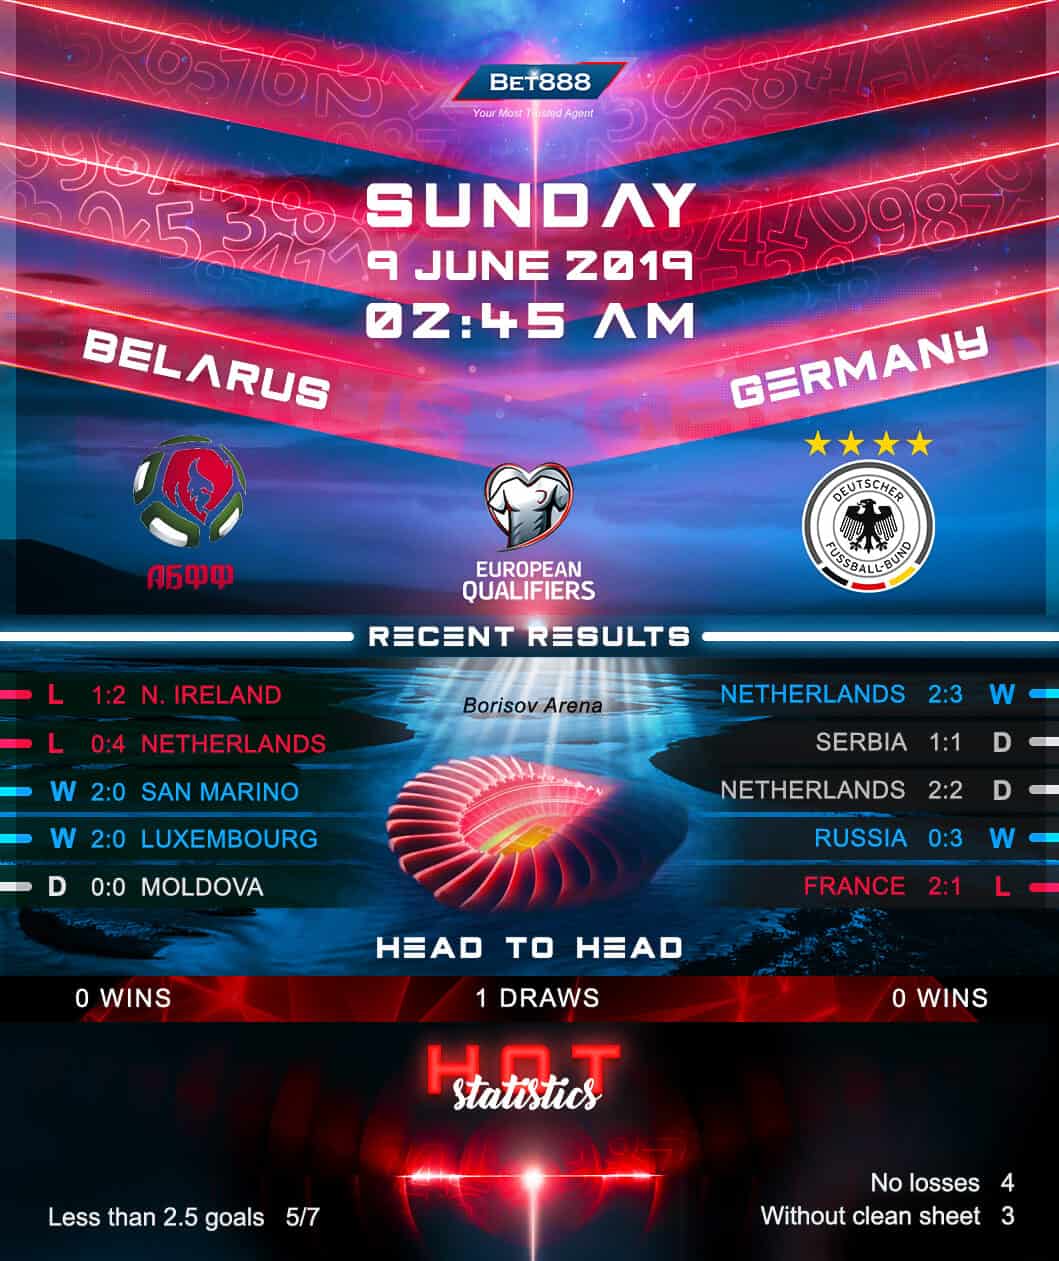 Belarus vs Germany﻿ 09/06/19